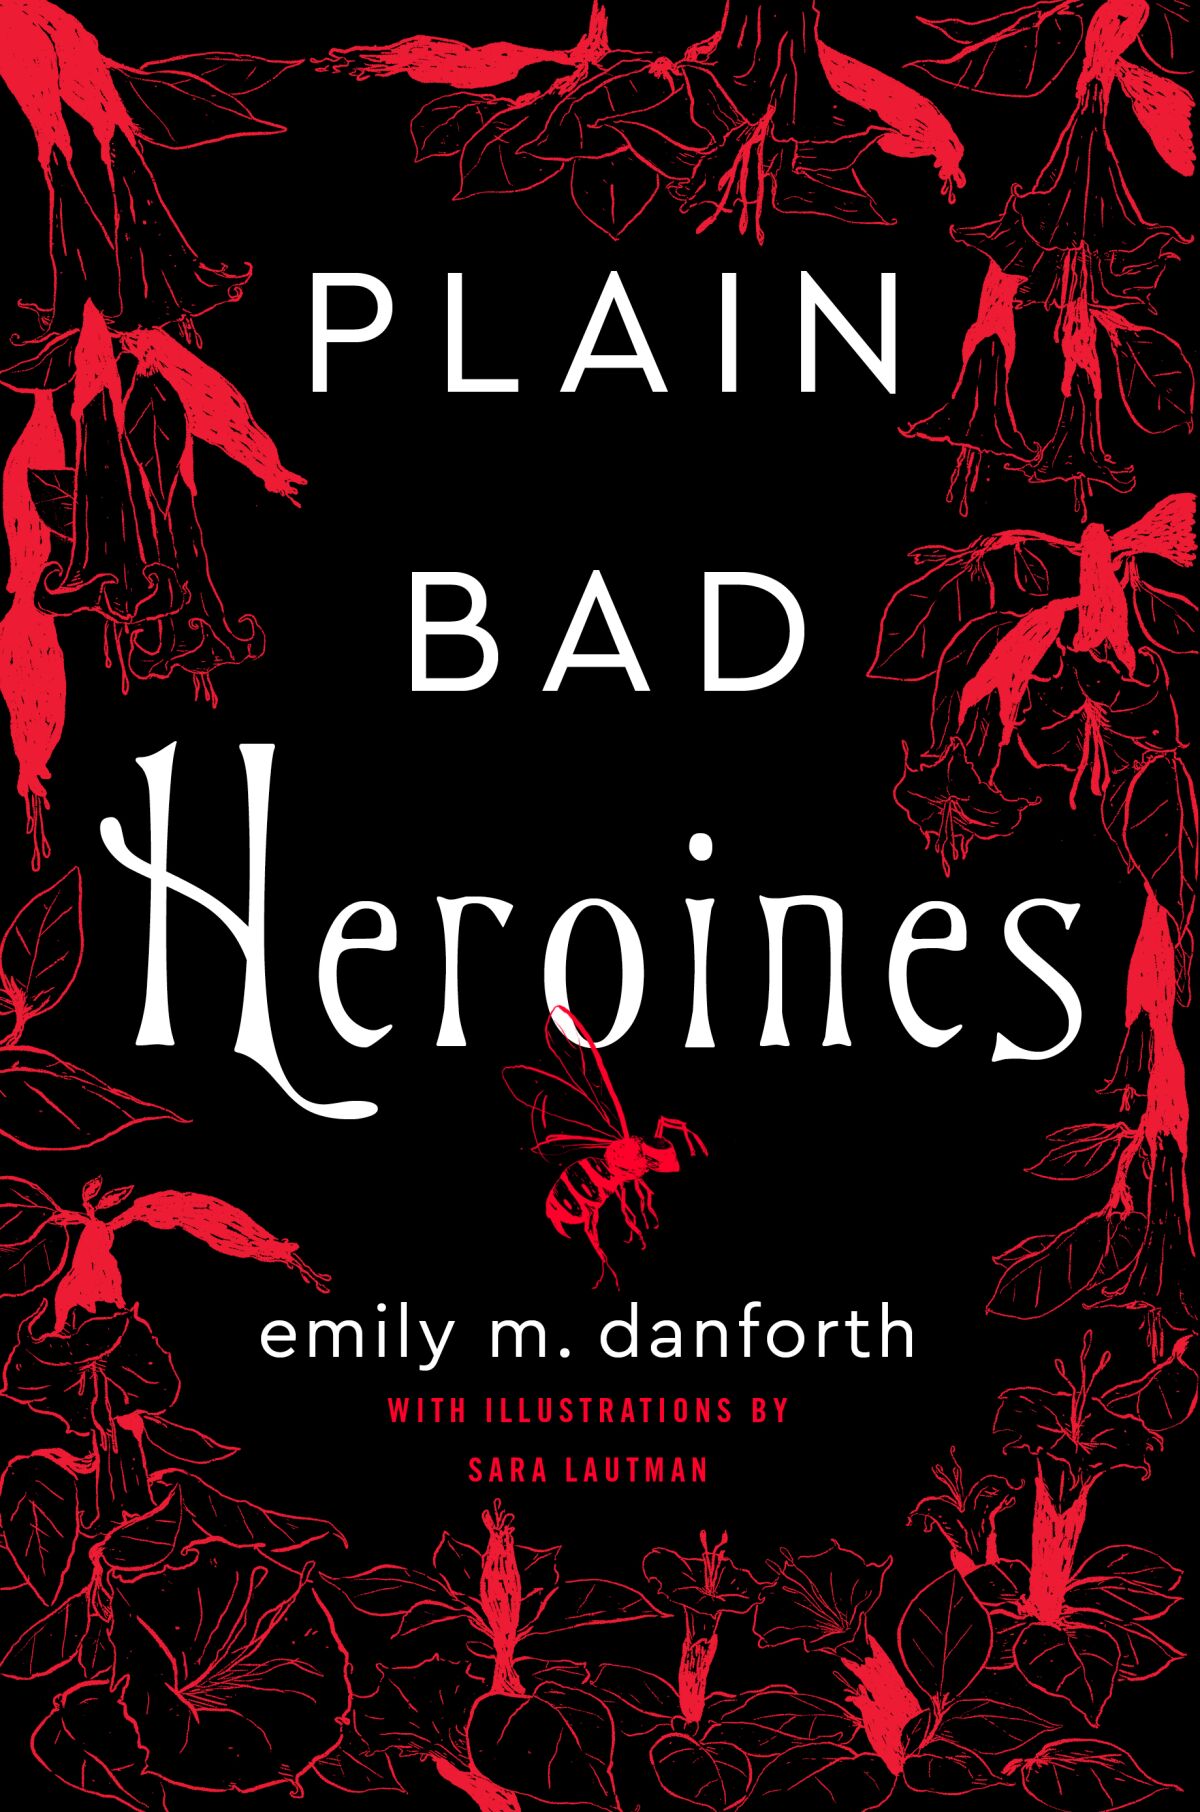 Book jacket for "Plain Bad Heroines," by Emily Danforth